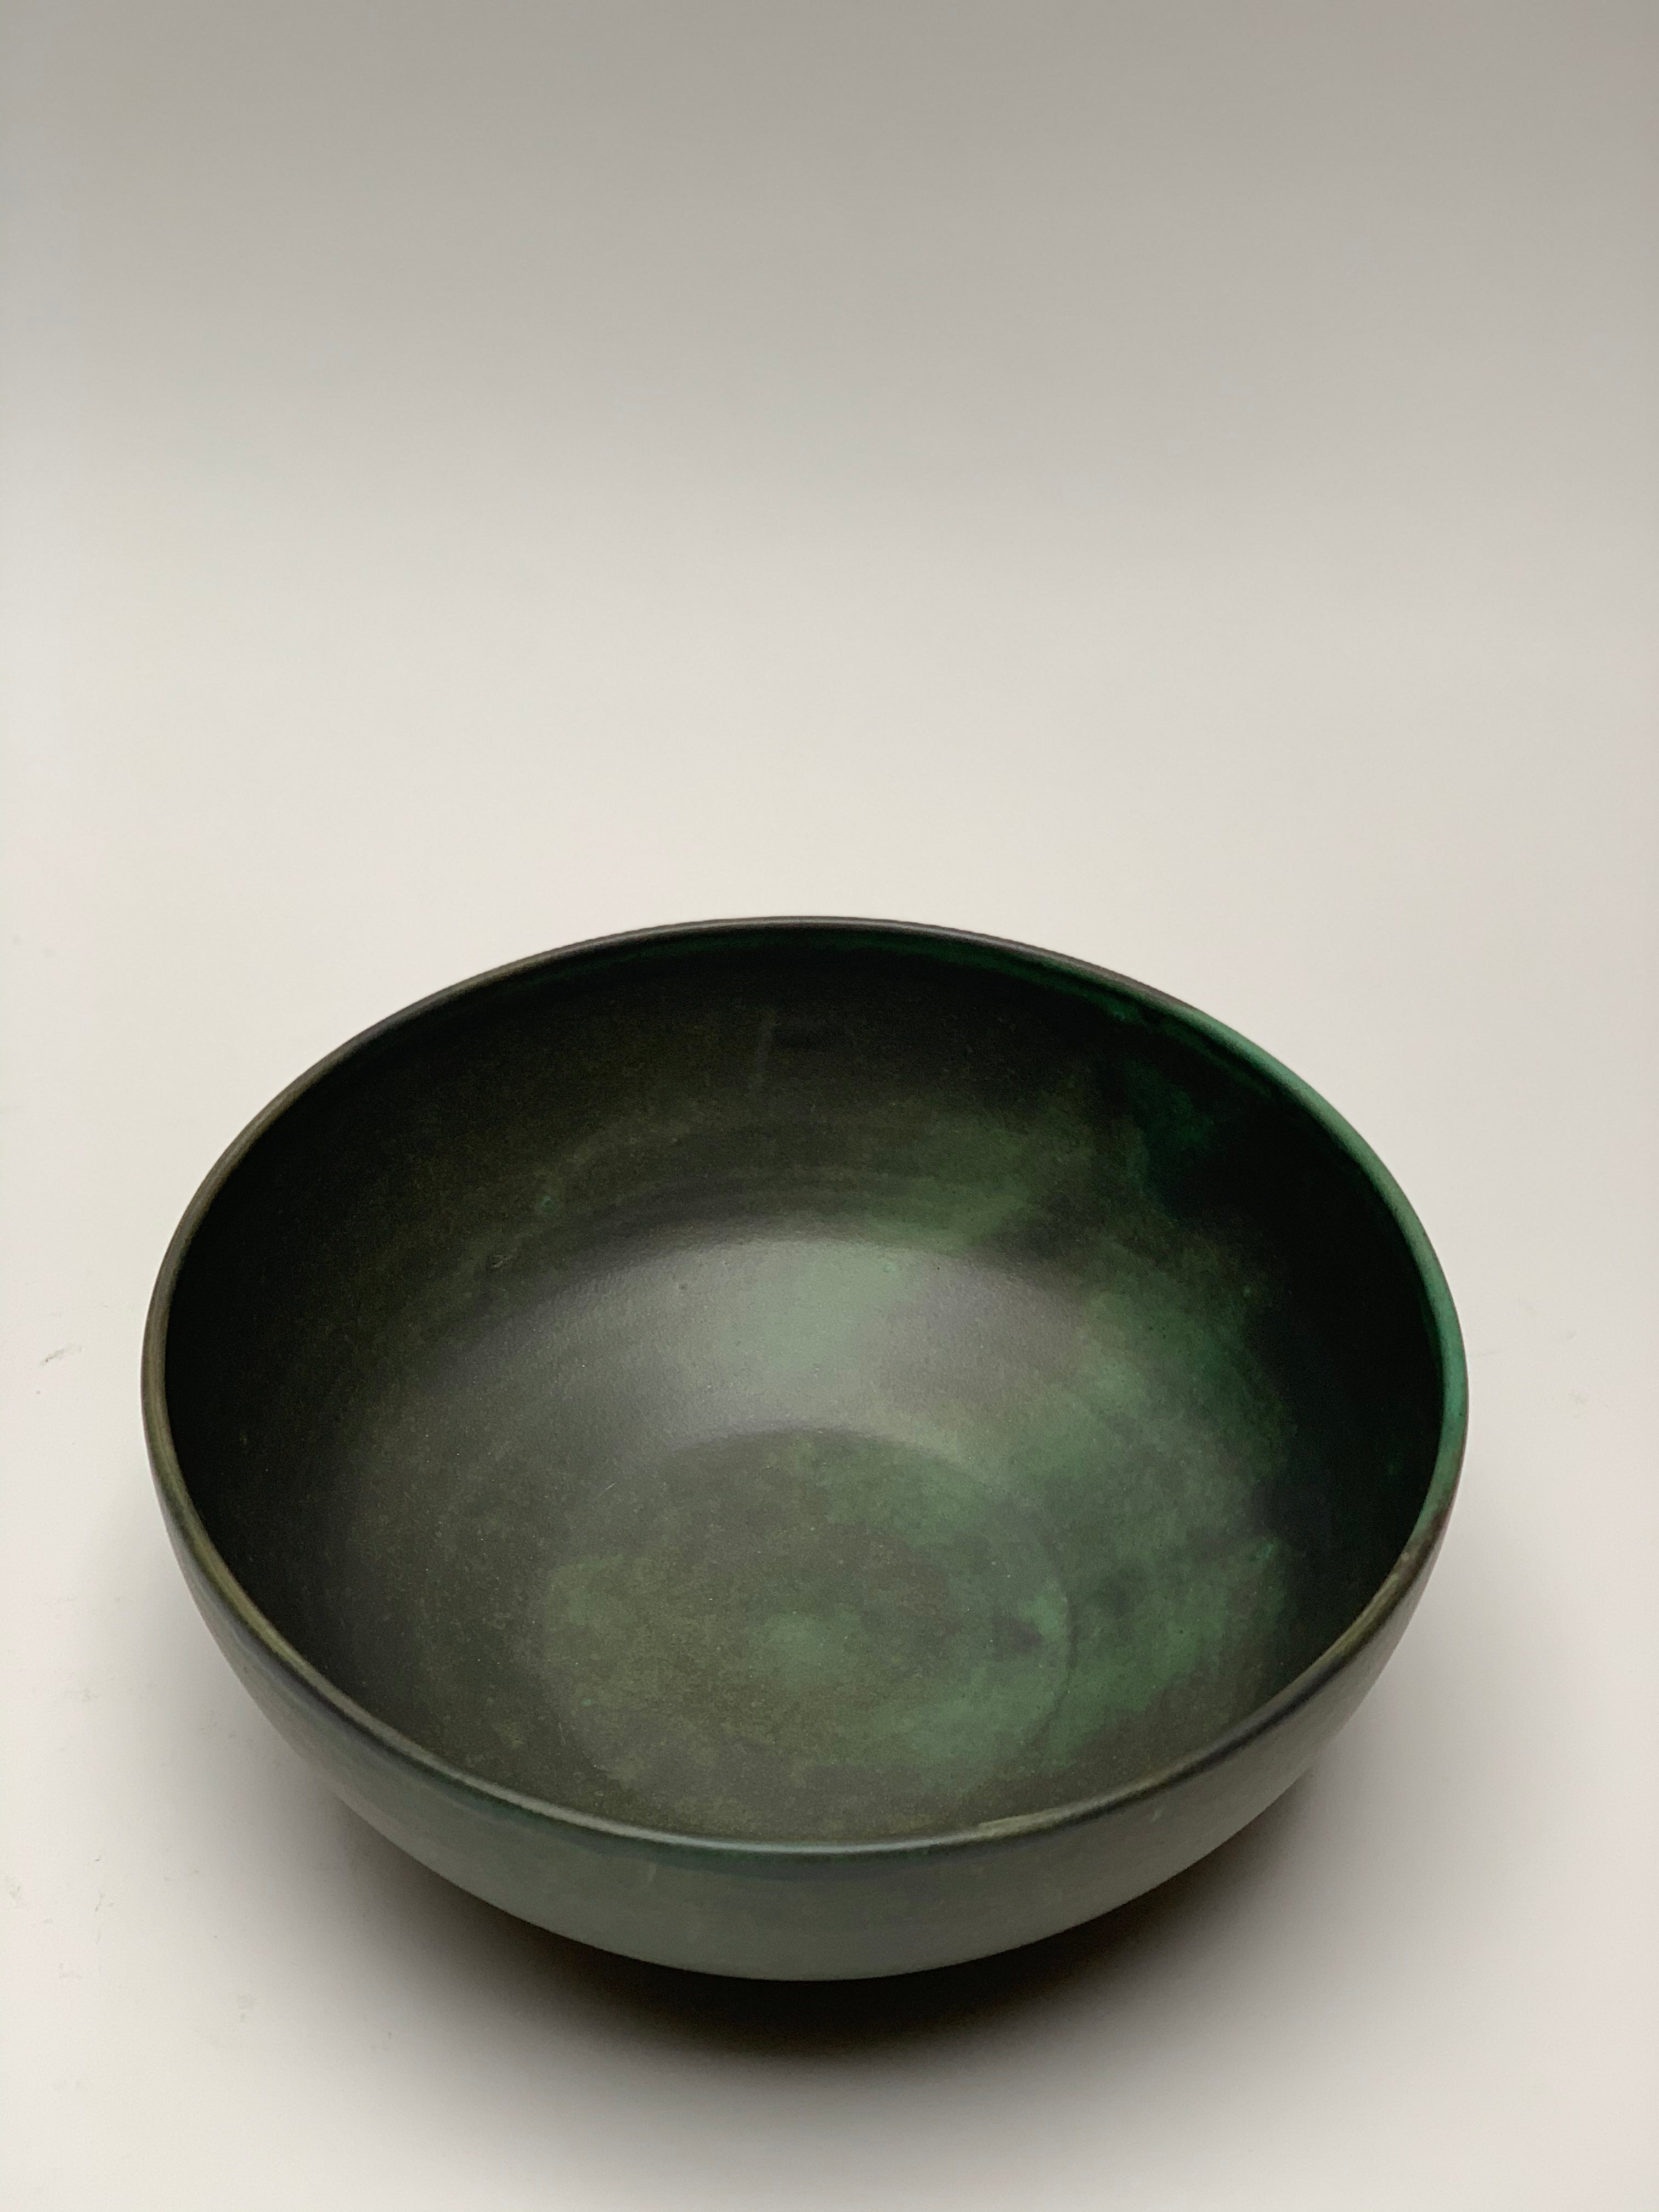 Large Salad Bowl in Emerald, Kati von Lehman